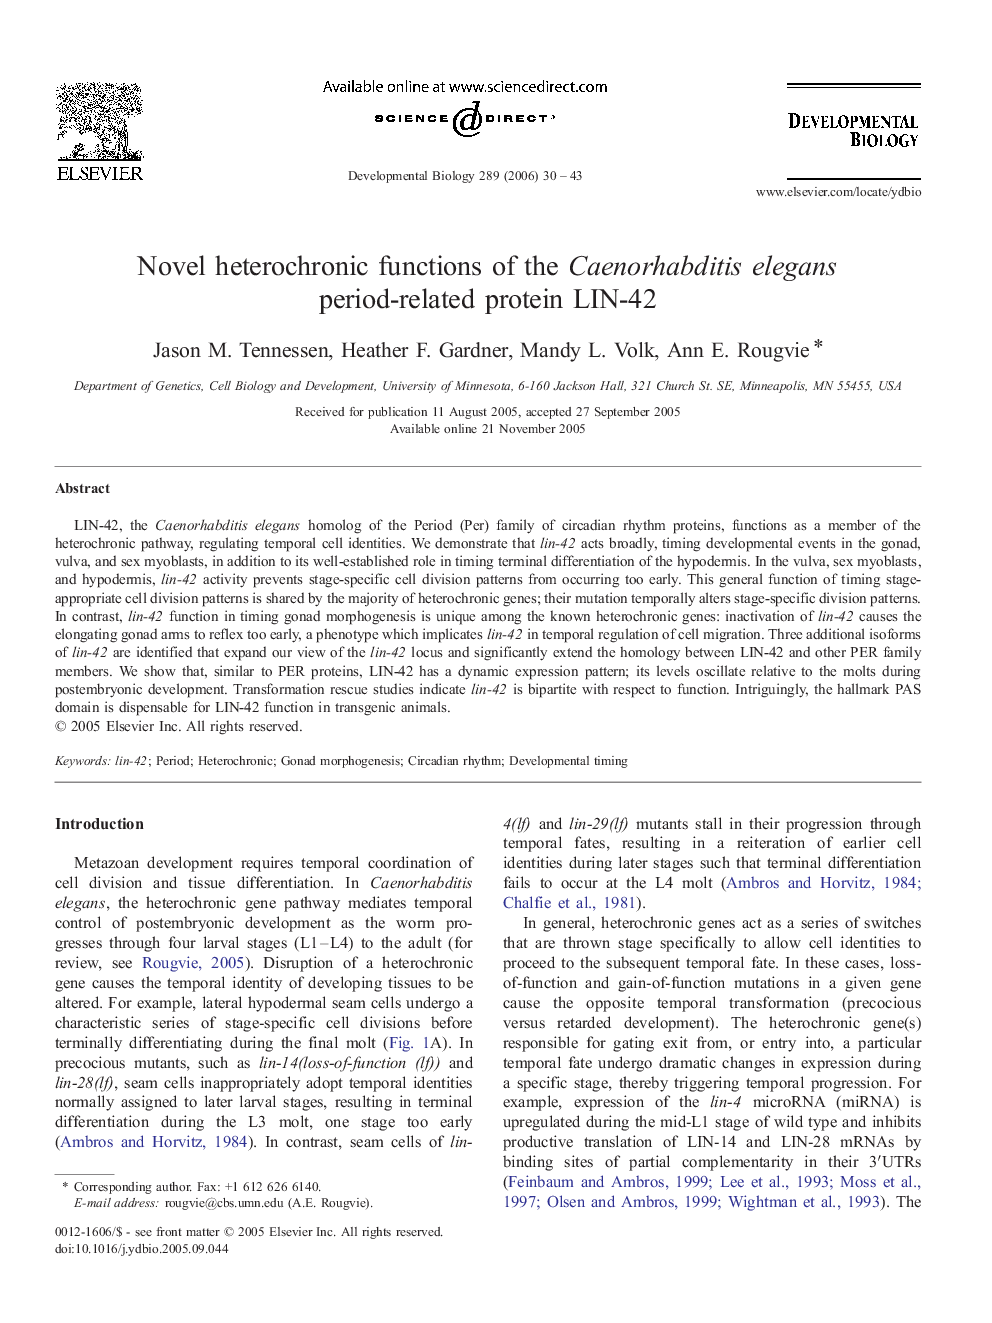 Novel heterochronic functions of the Caenorhabditis elegans period-related protein LIN-42